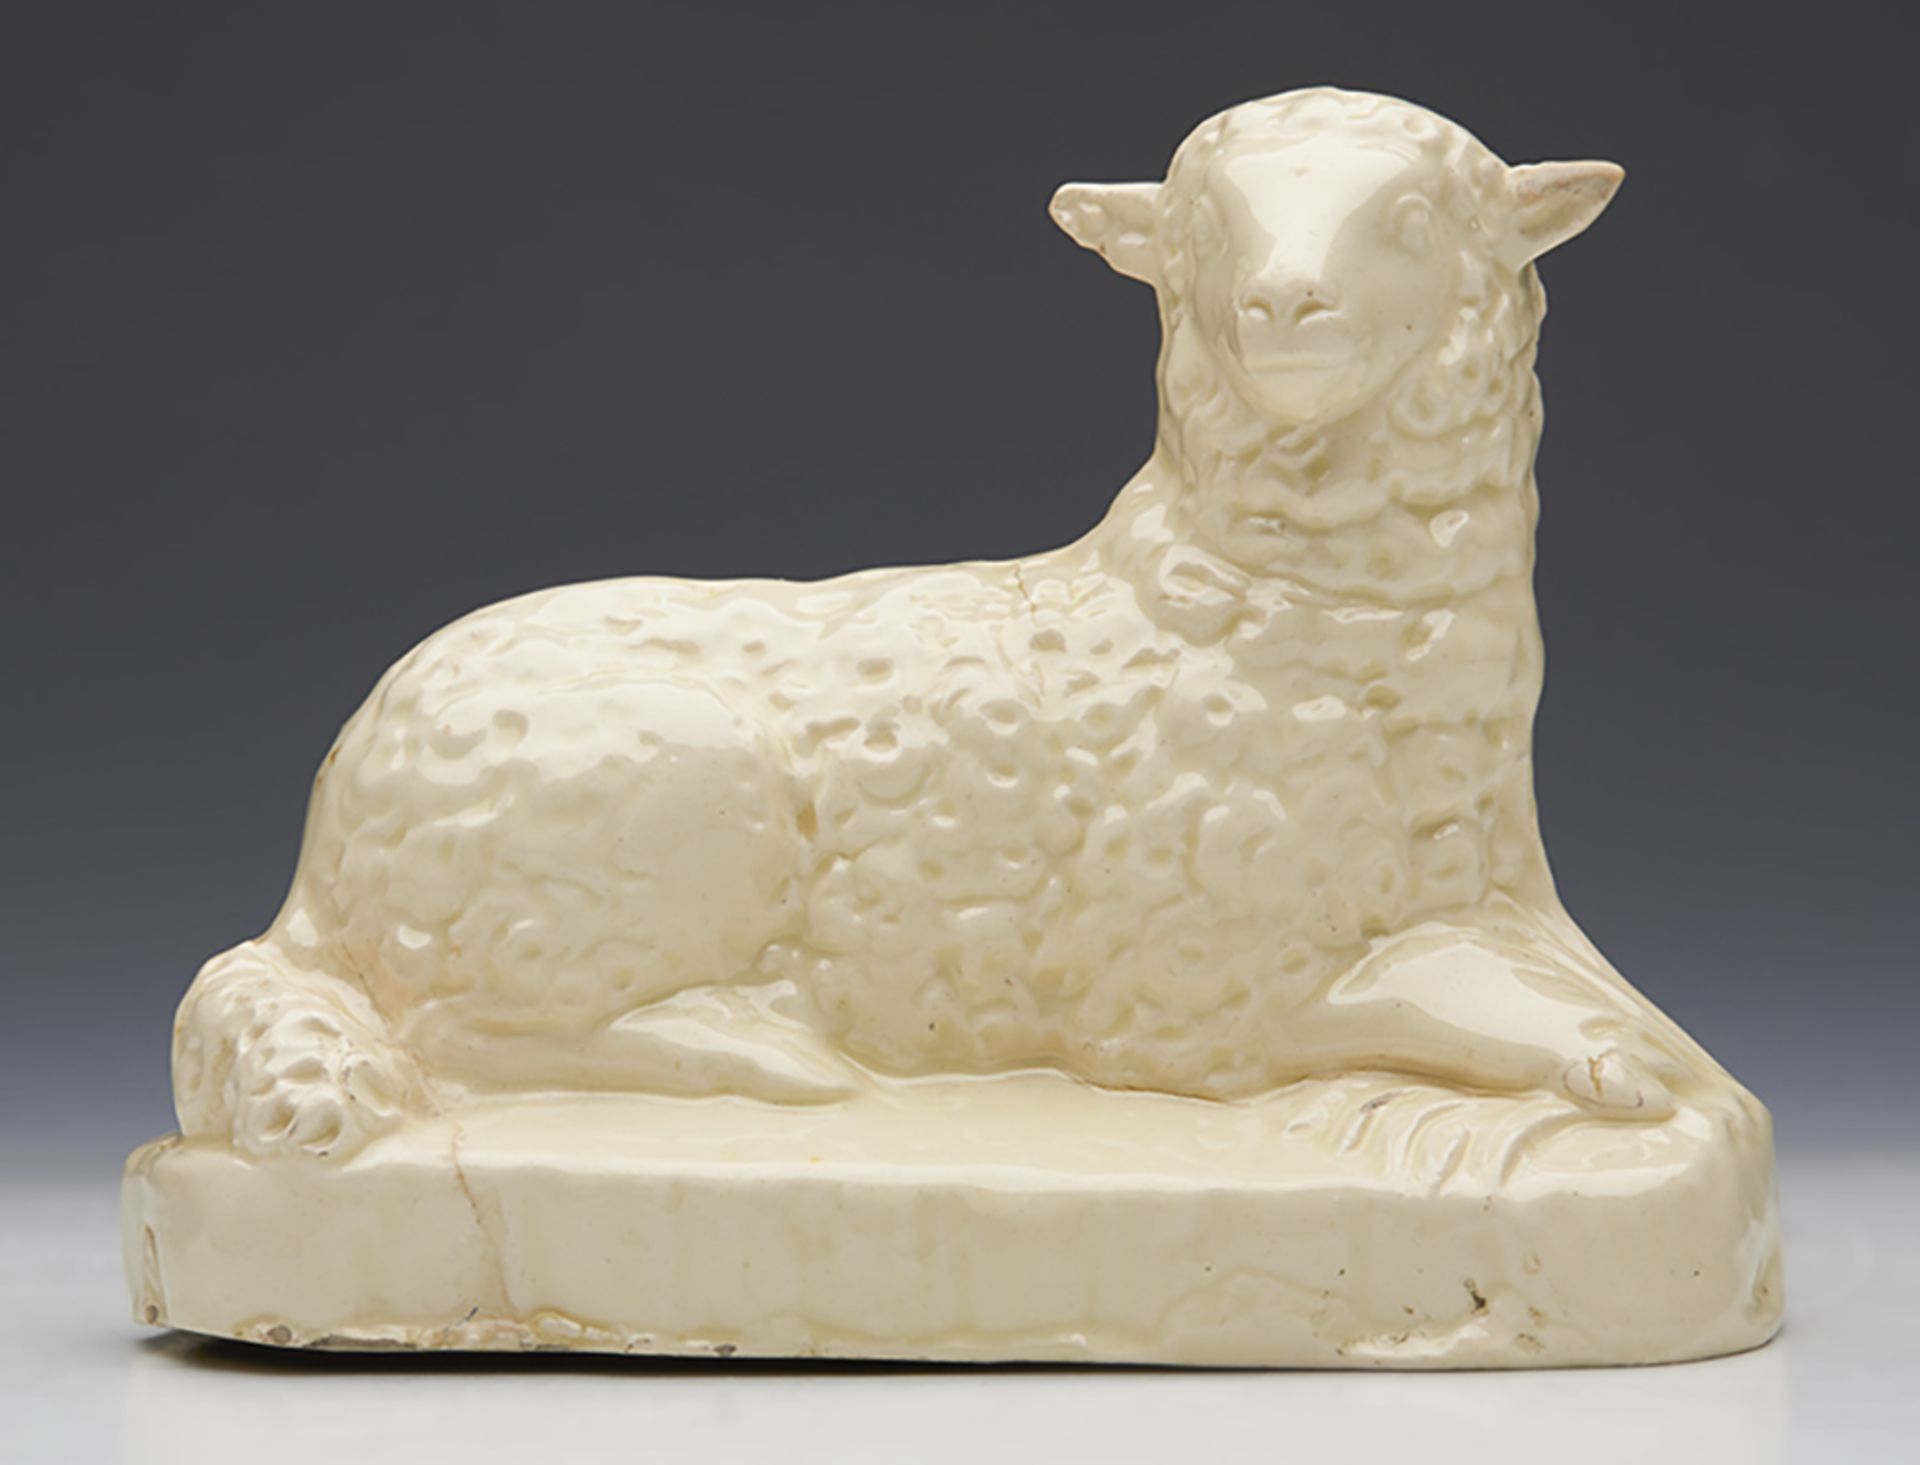 ANTIQUE ENGLISH CREAMWARE POTTERY RECUMBENT SHEEP FIGURE c.1800